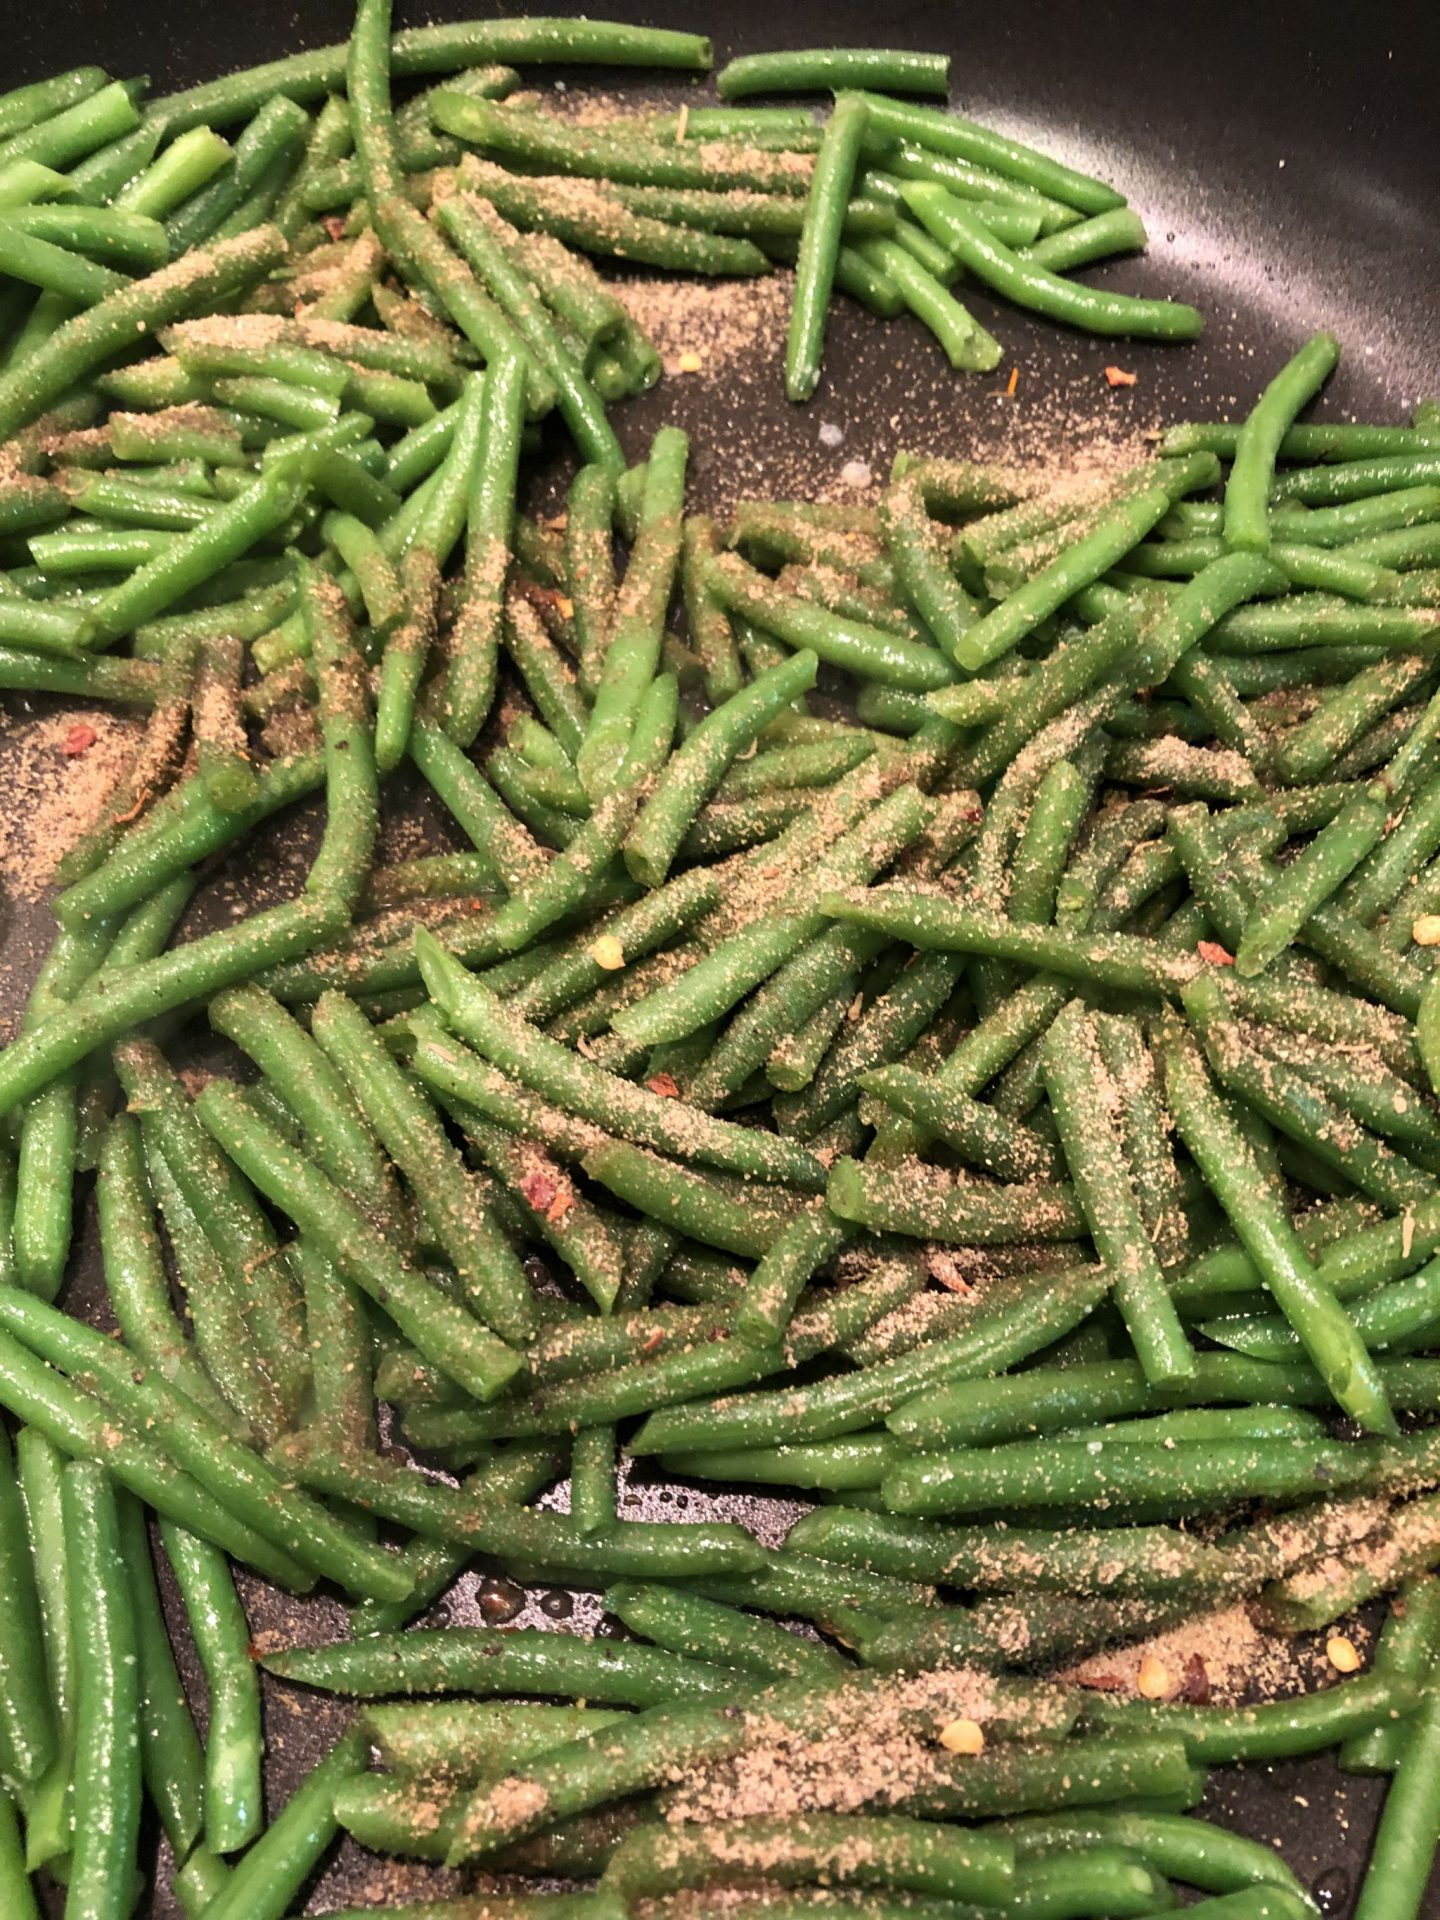 Green beans with umamai